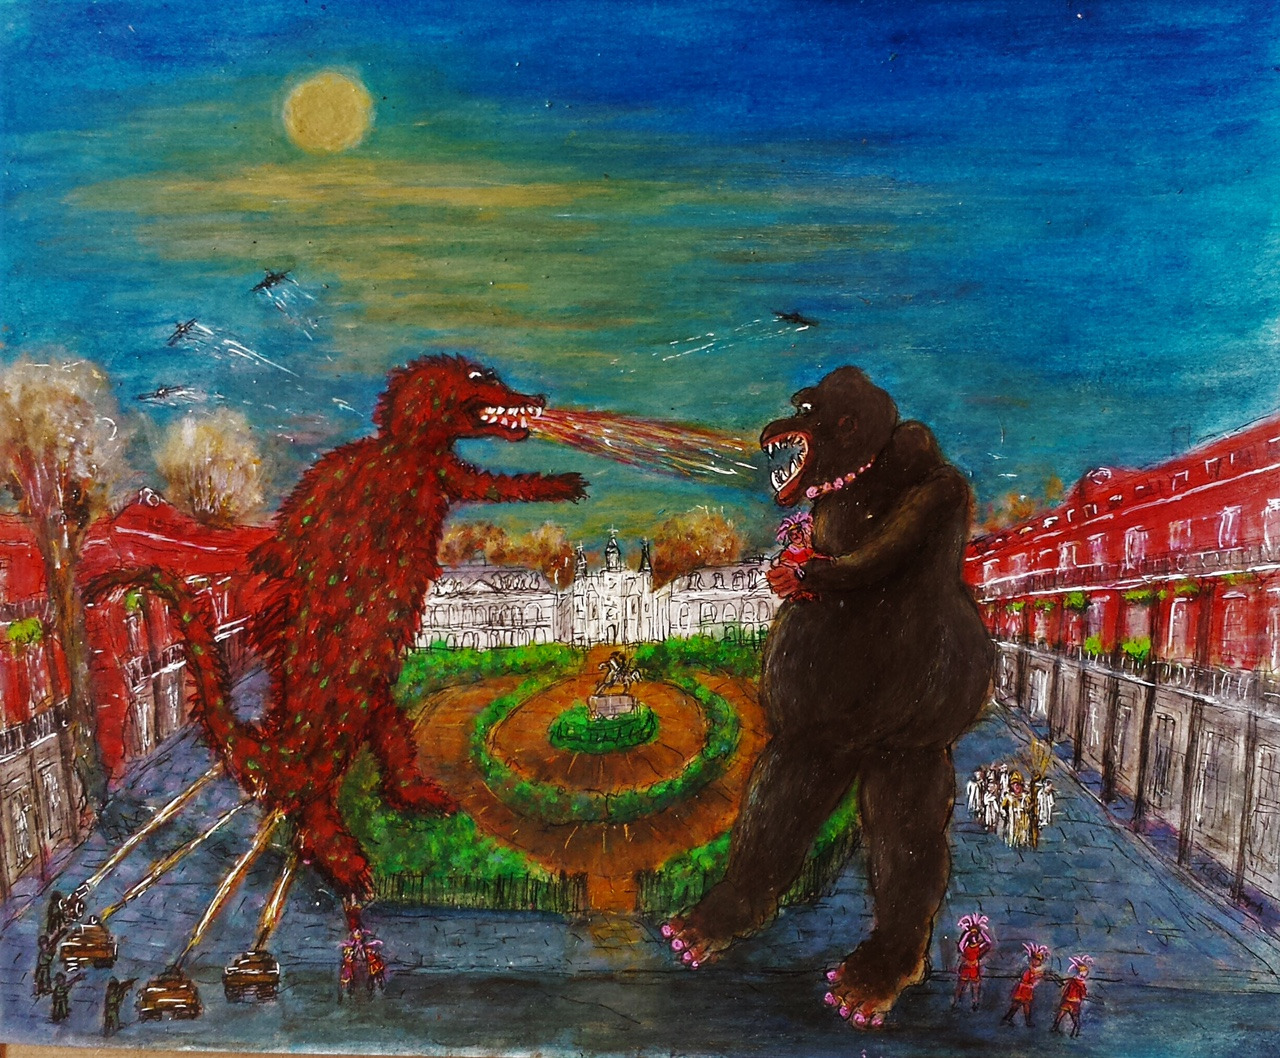 Achampagnequeen kong vs gatorsaurus11x14acrylicinkwatercolor framed caejpy